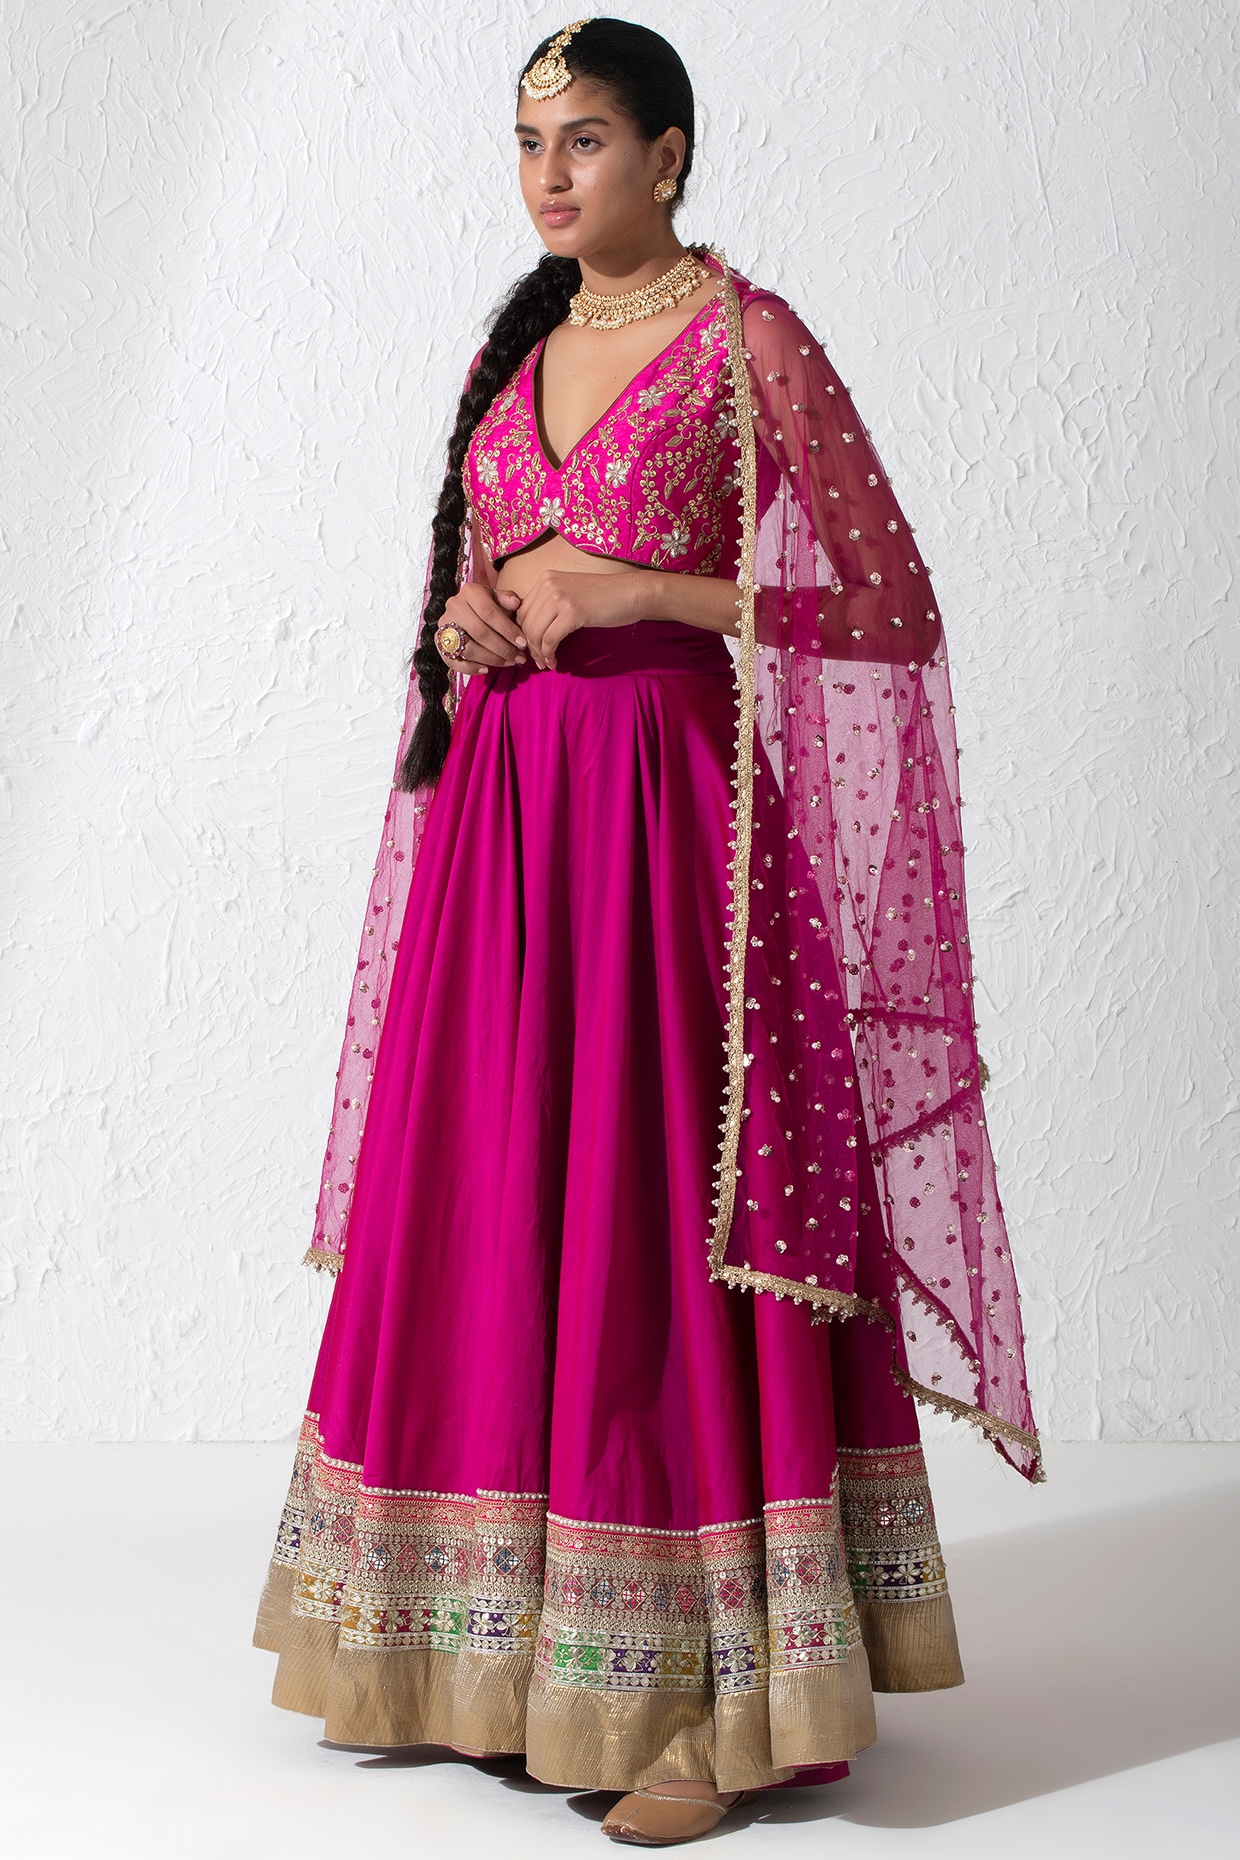 Wedding Wear Designer Bridal Lehenga. at Rs 3500 | Bridal Lehengas in Surat  | ID: 17804907691